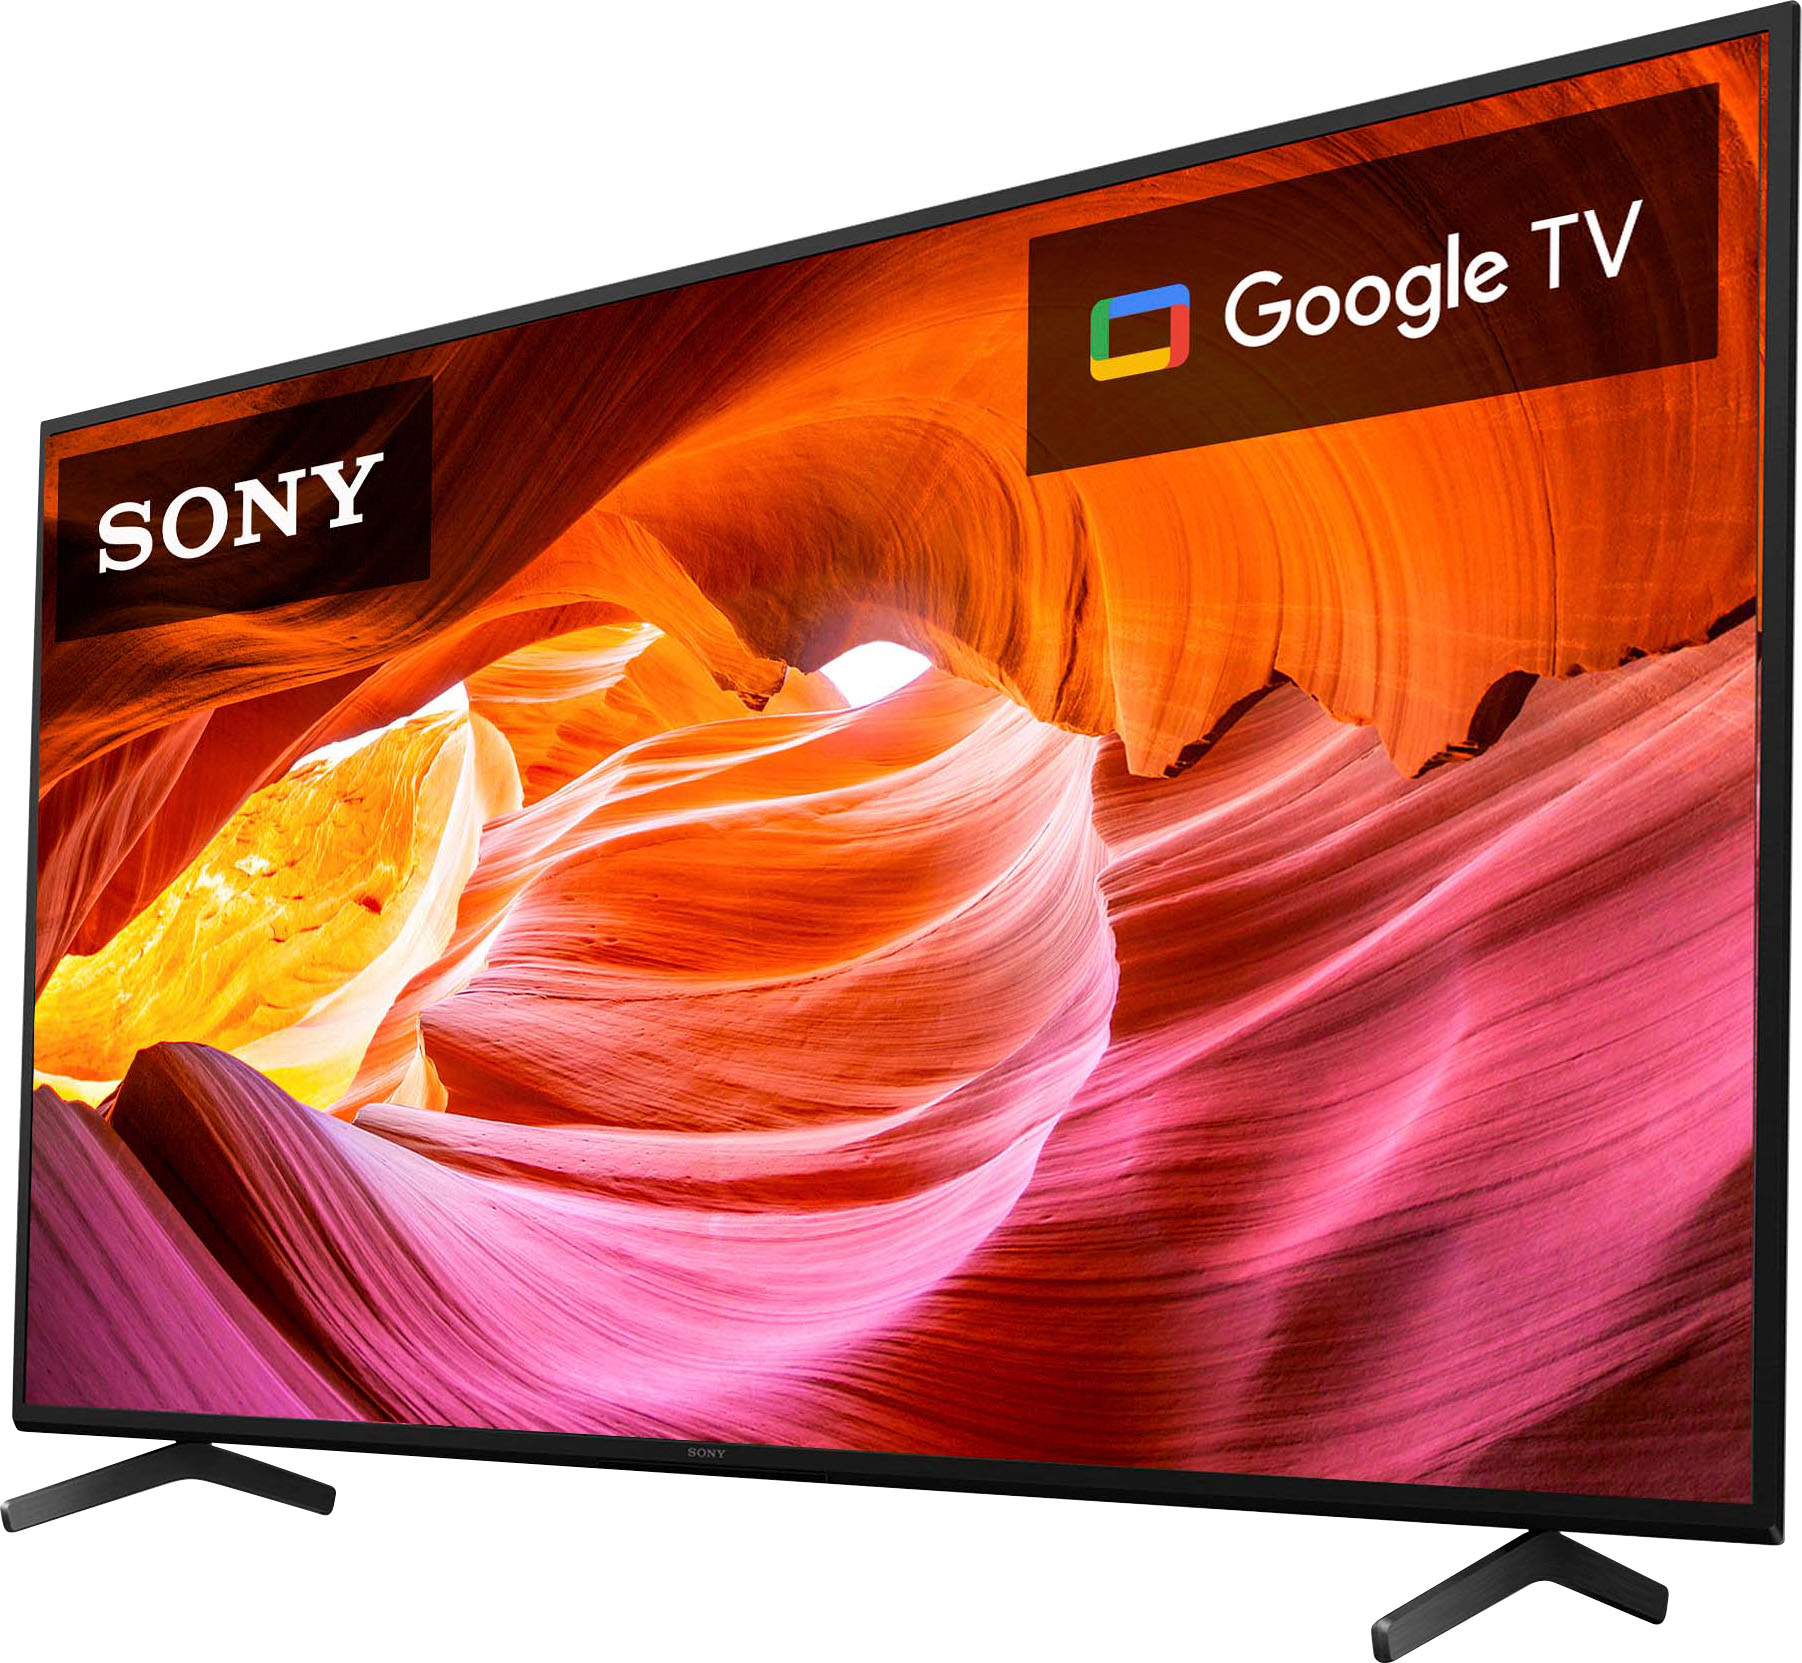 Angle View: Sony - 55" Class X75K 4K HDR LED Google TV